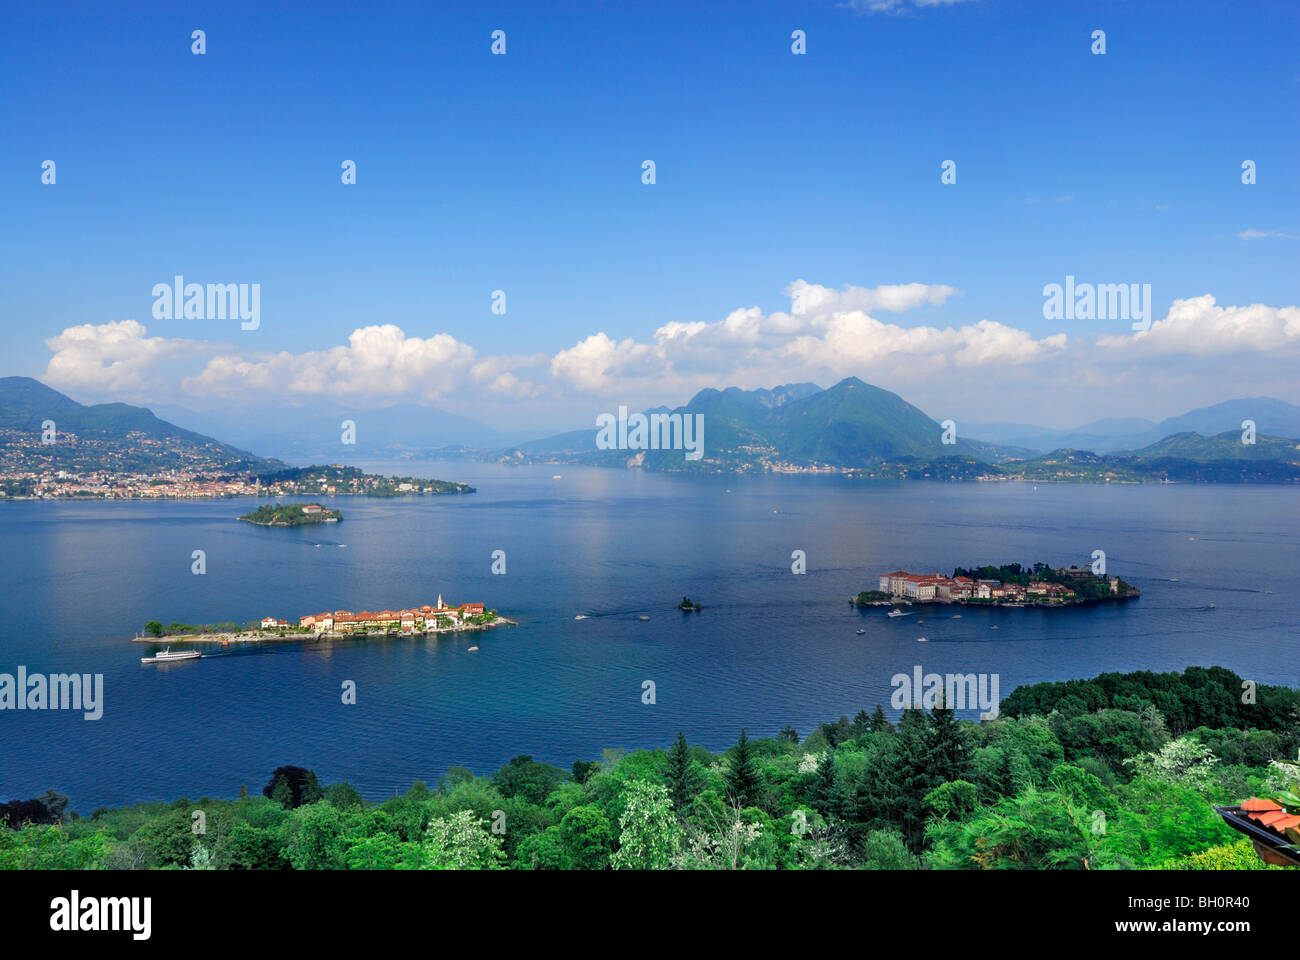 Lake Maggiore with Borromee isles, Isole Borromee, Isola Superiore, Isola Bella and Isola Madre, Stresa, lake Maggiore, Lago Mag Stock Photo